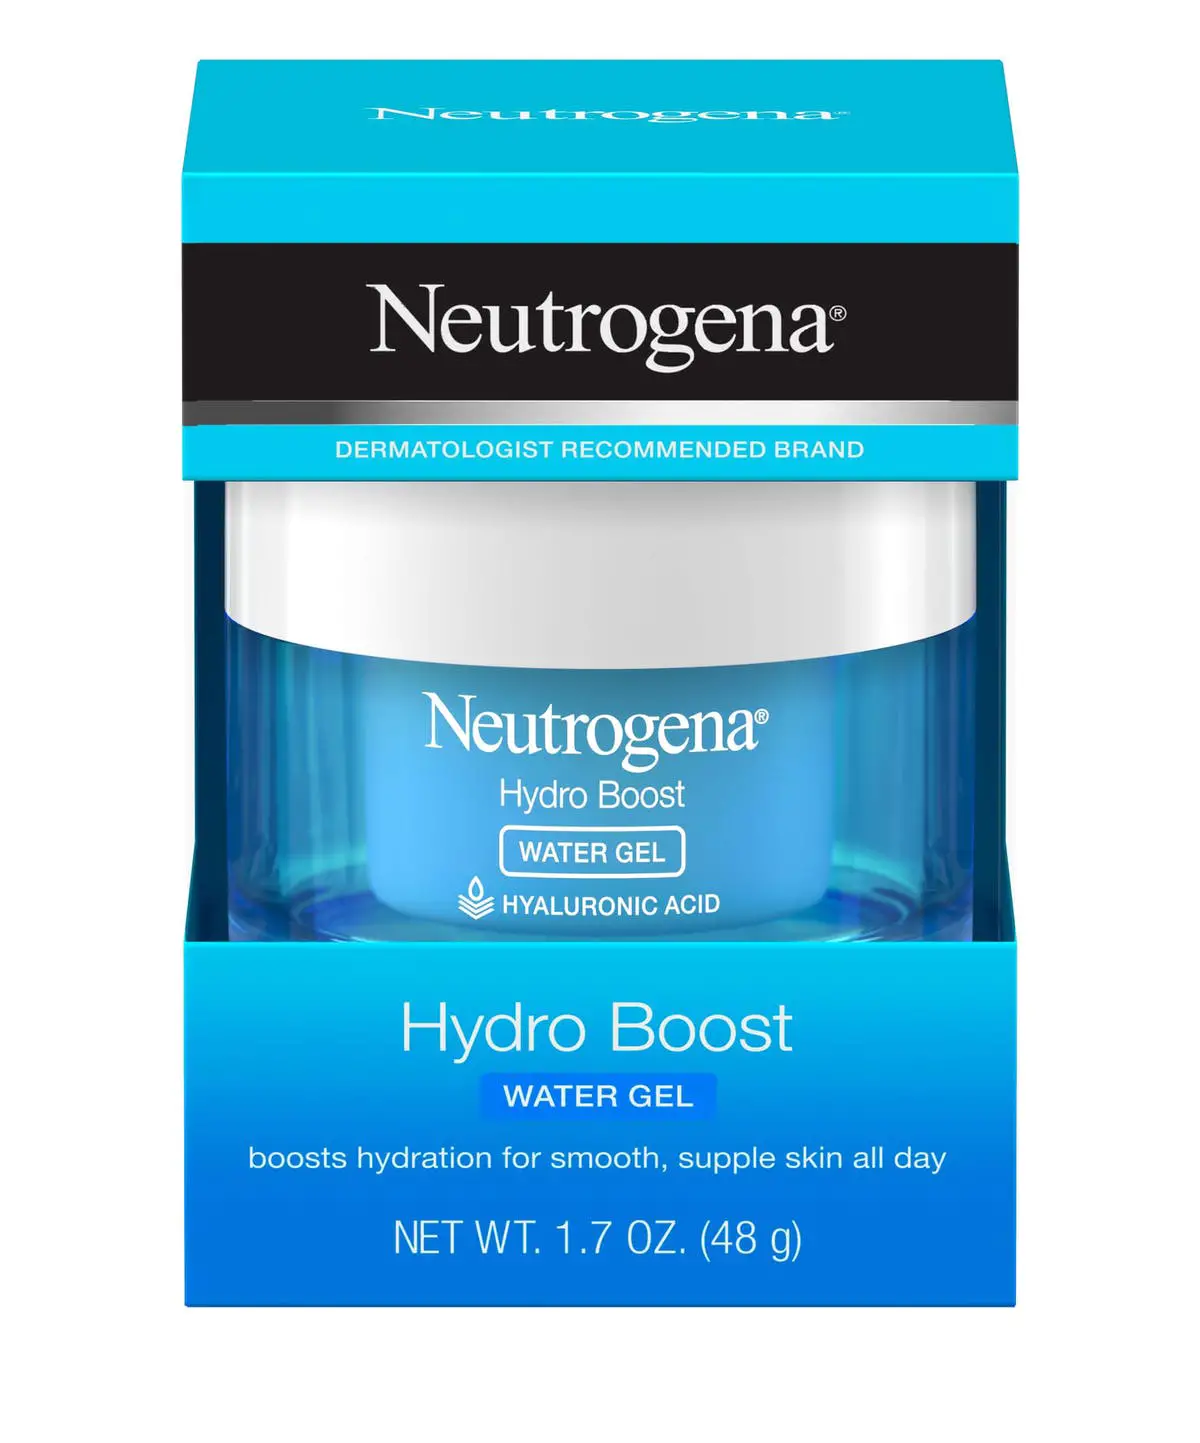 Neutrogena hydroboost